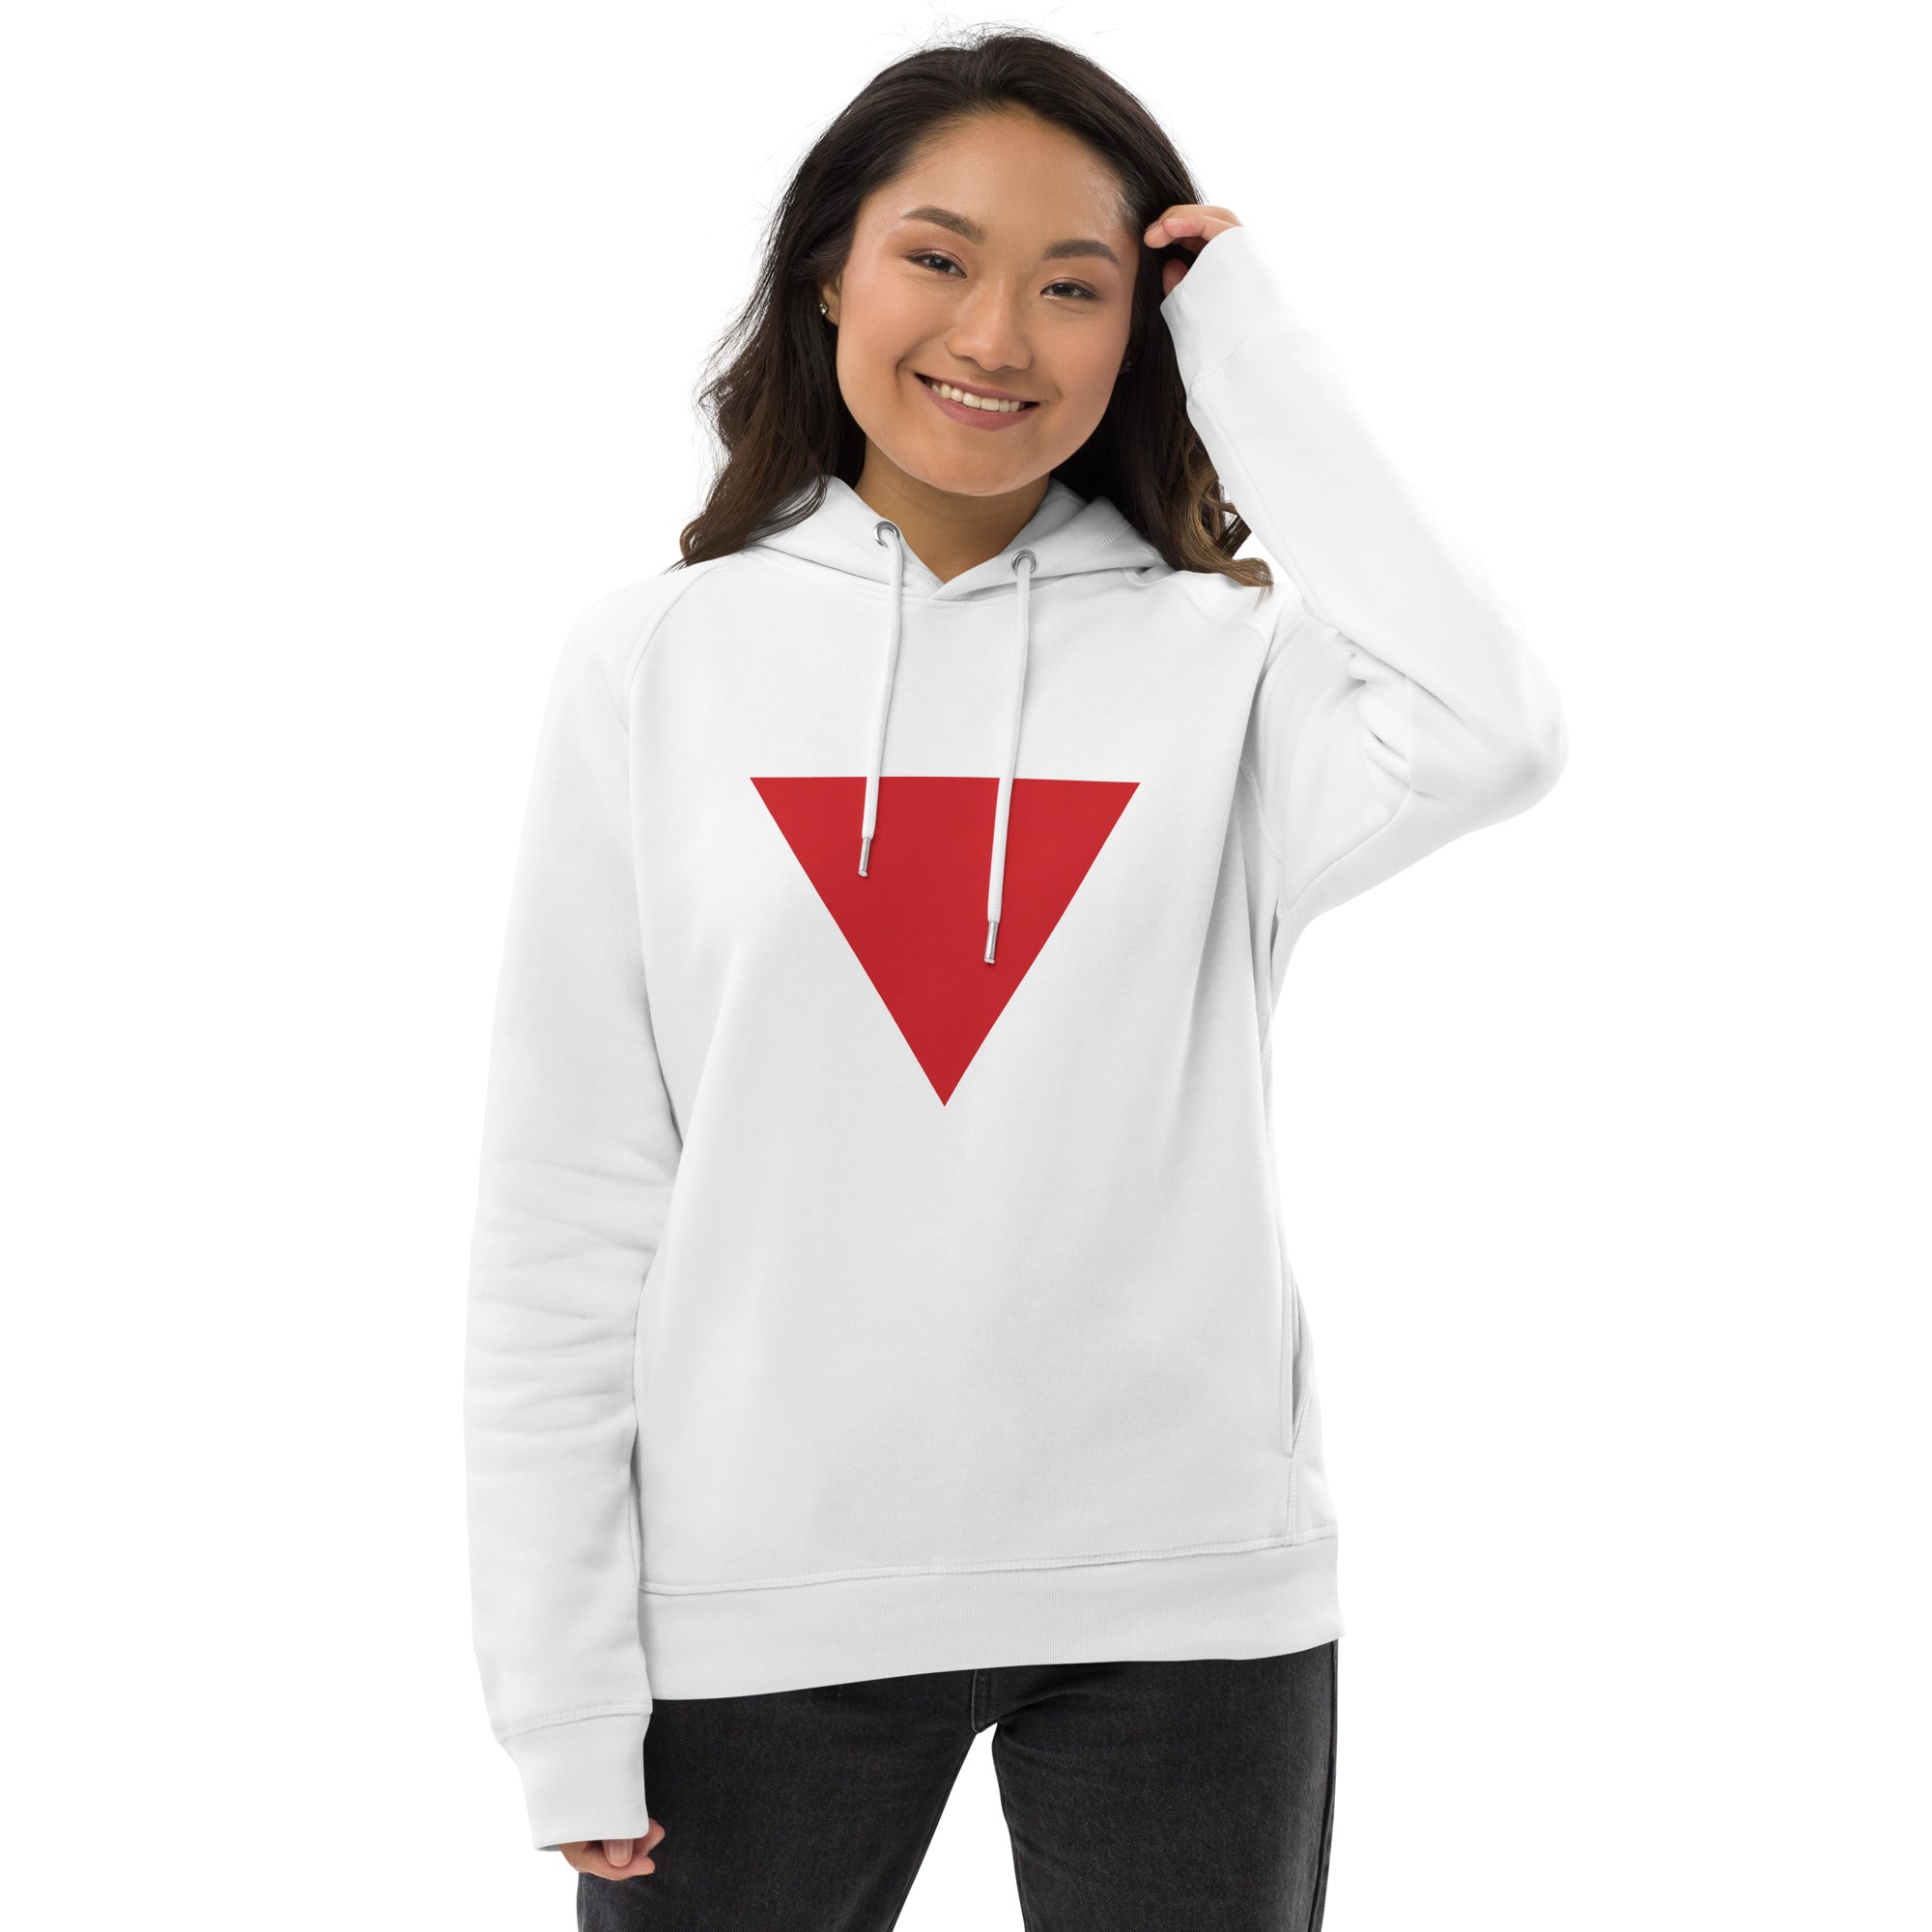 red triangle emoji - Hoodie